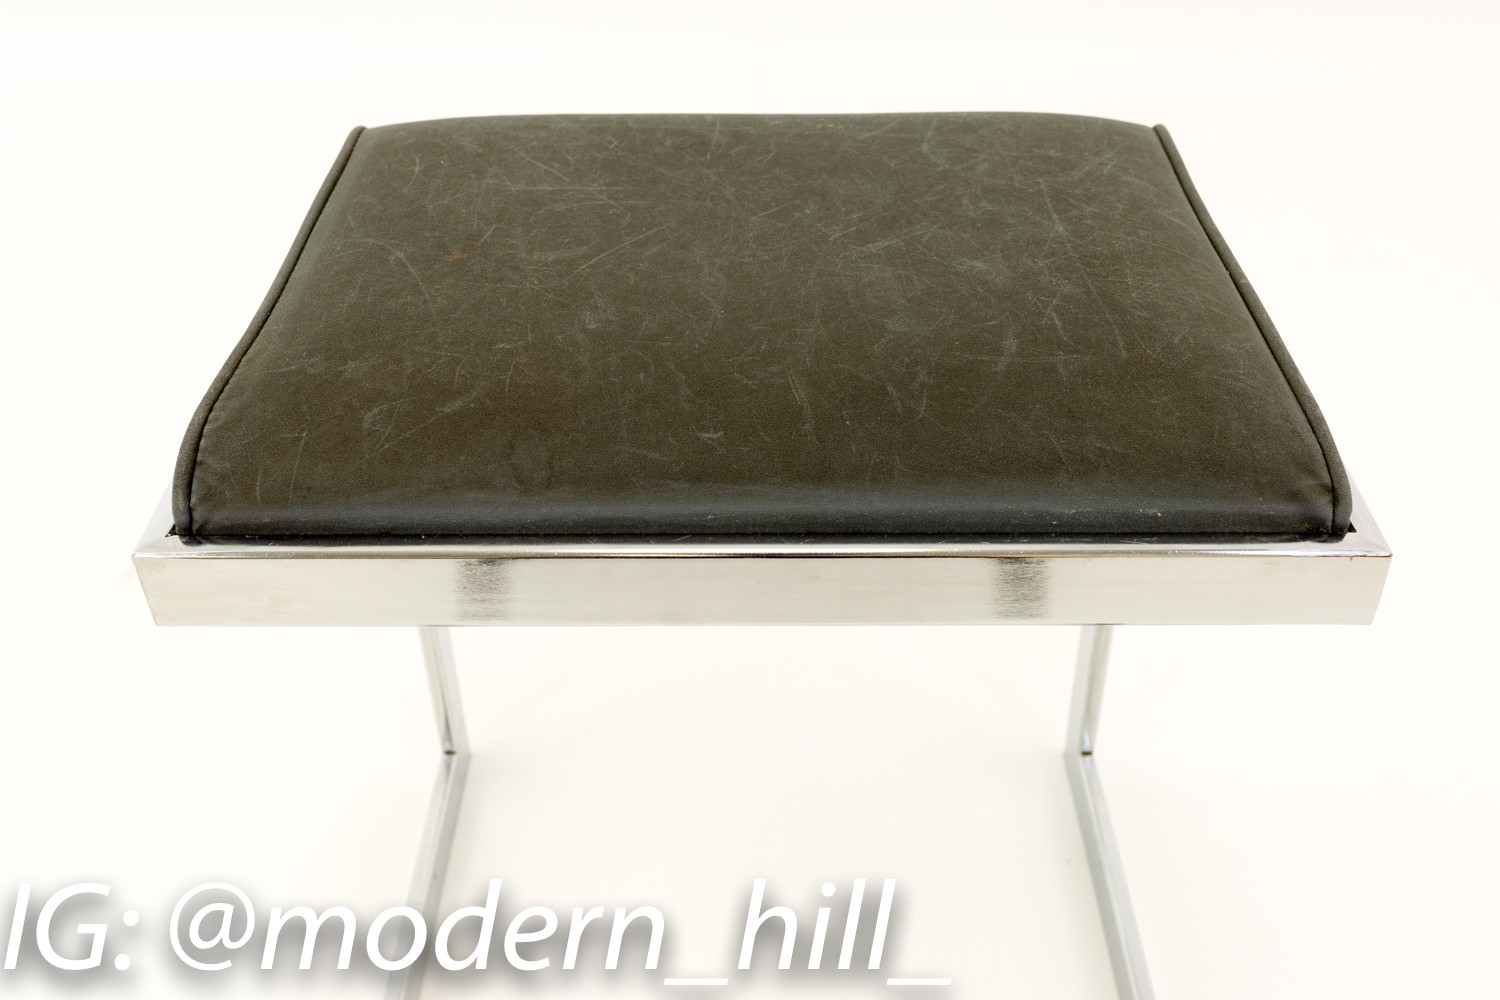 Milo Baughman Style Upholstered Chrome Cantilever Mid Century Modern Stool